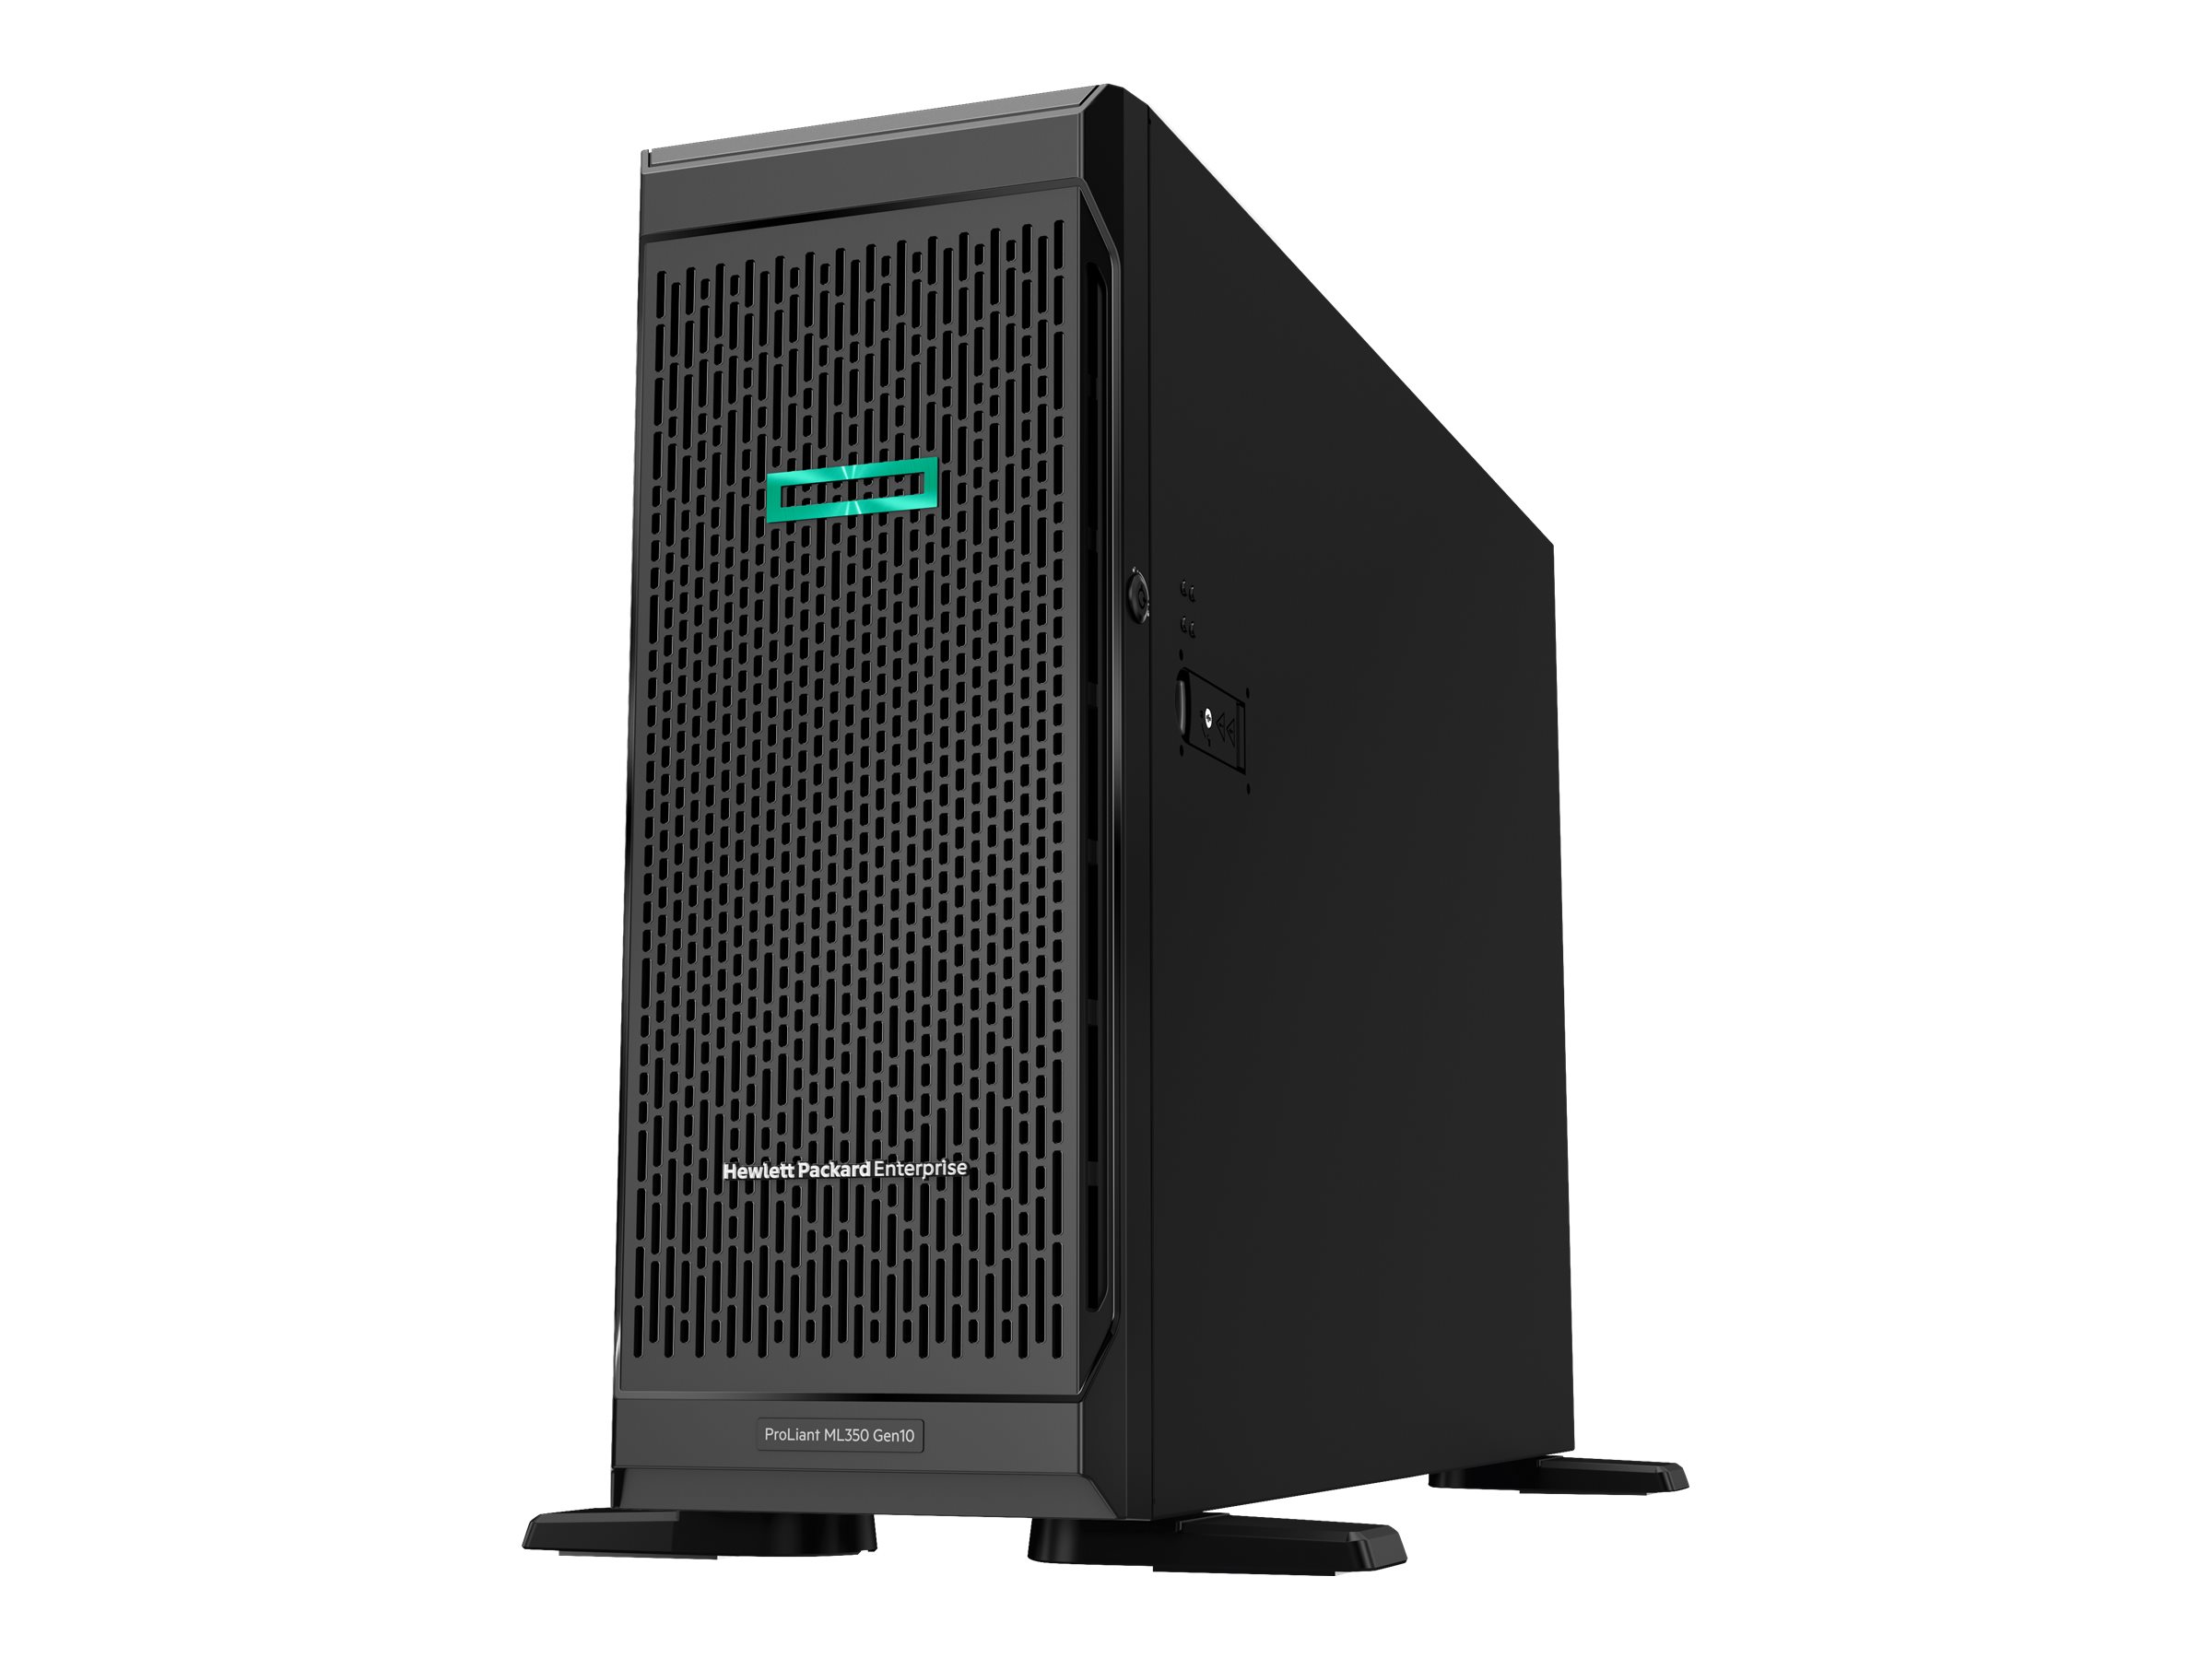 HPE ProLiant ML350 Gen10 Base - Server - Tower - 4U - zweiweg - 1 x Xeon Silver 4208 / 2.1 GHz